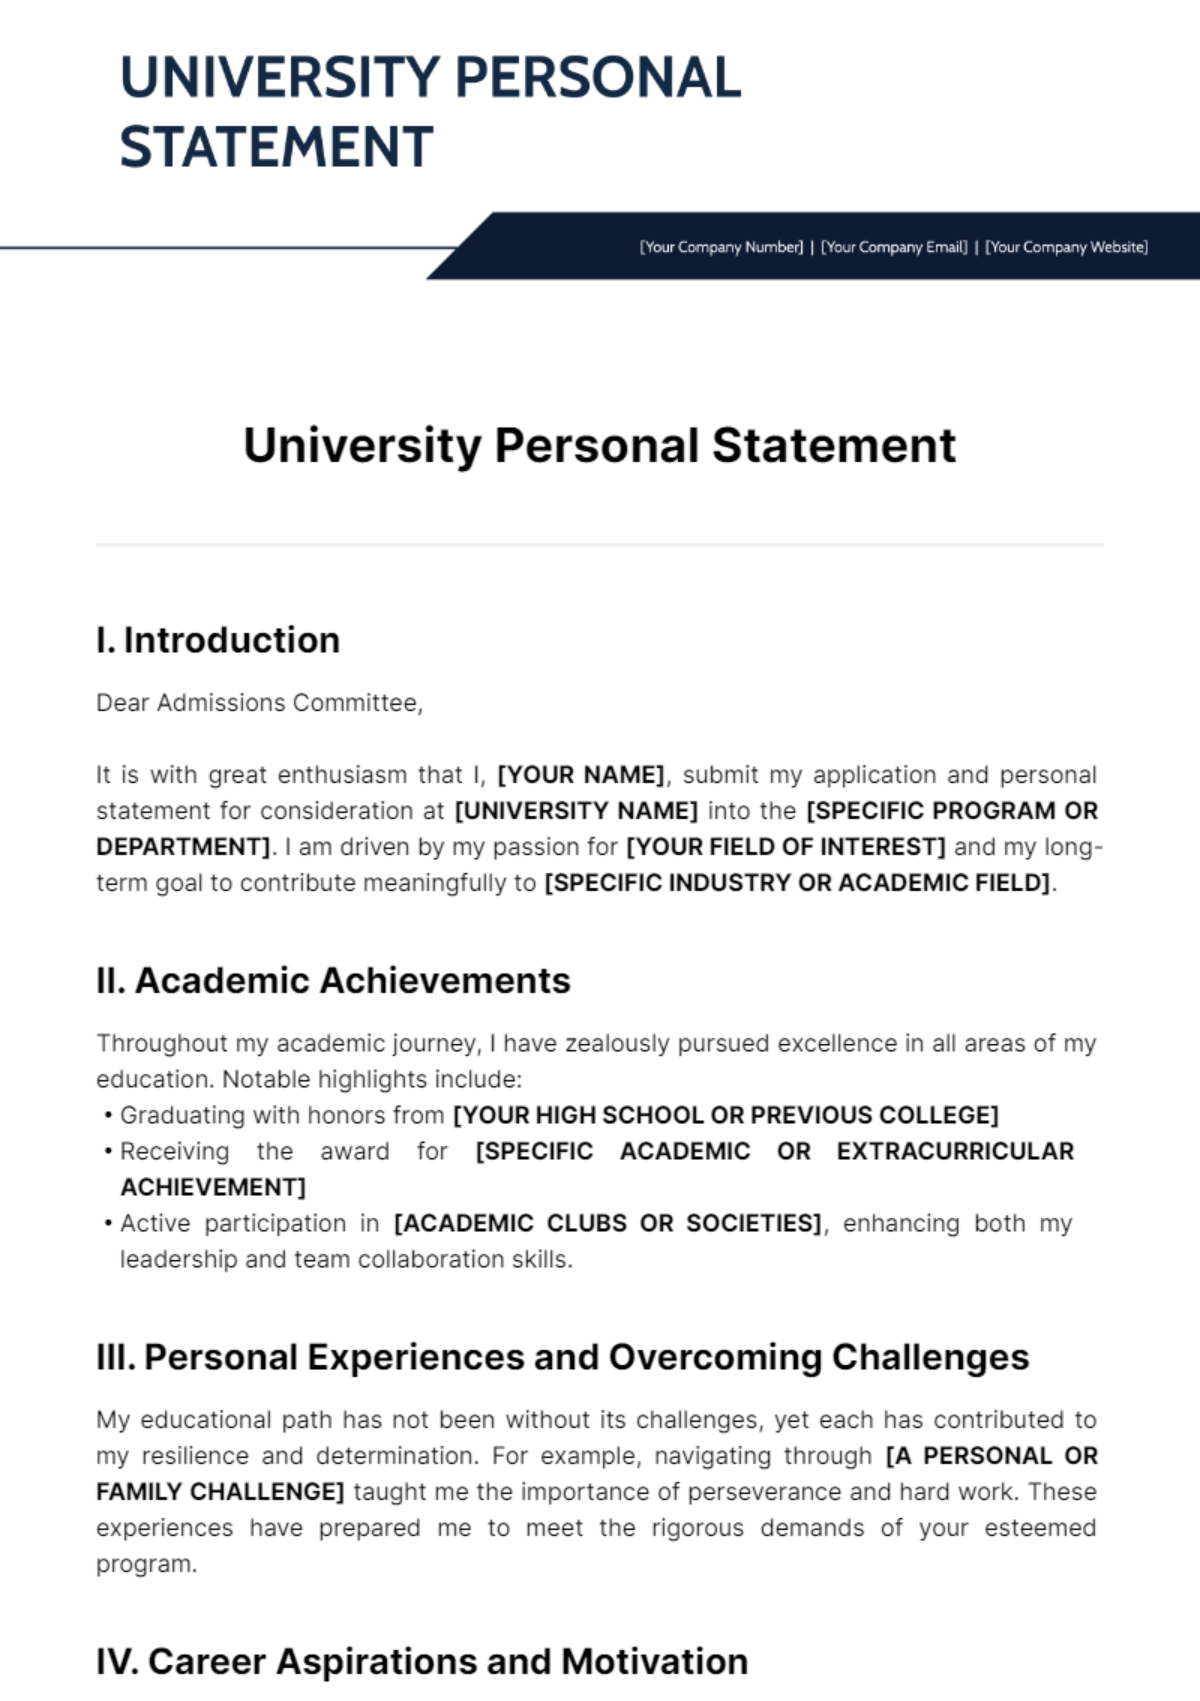 University Personal Statement Template